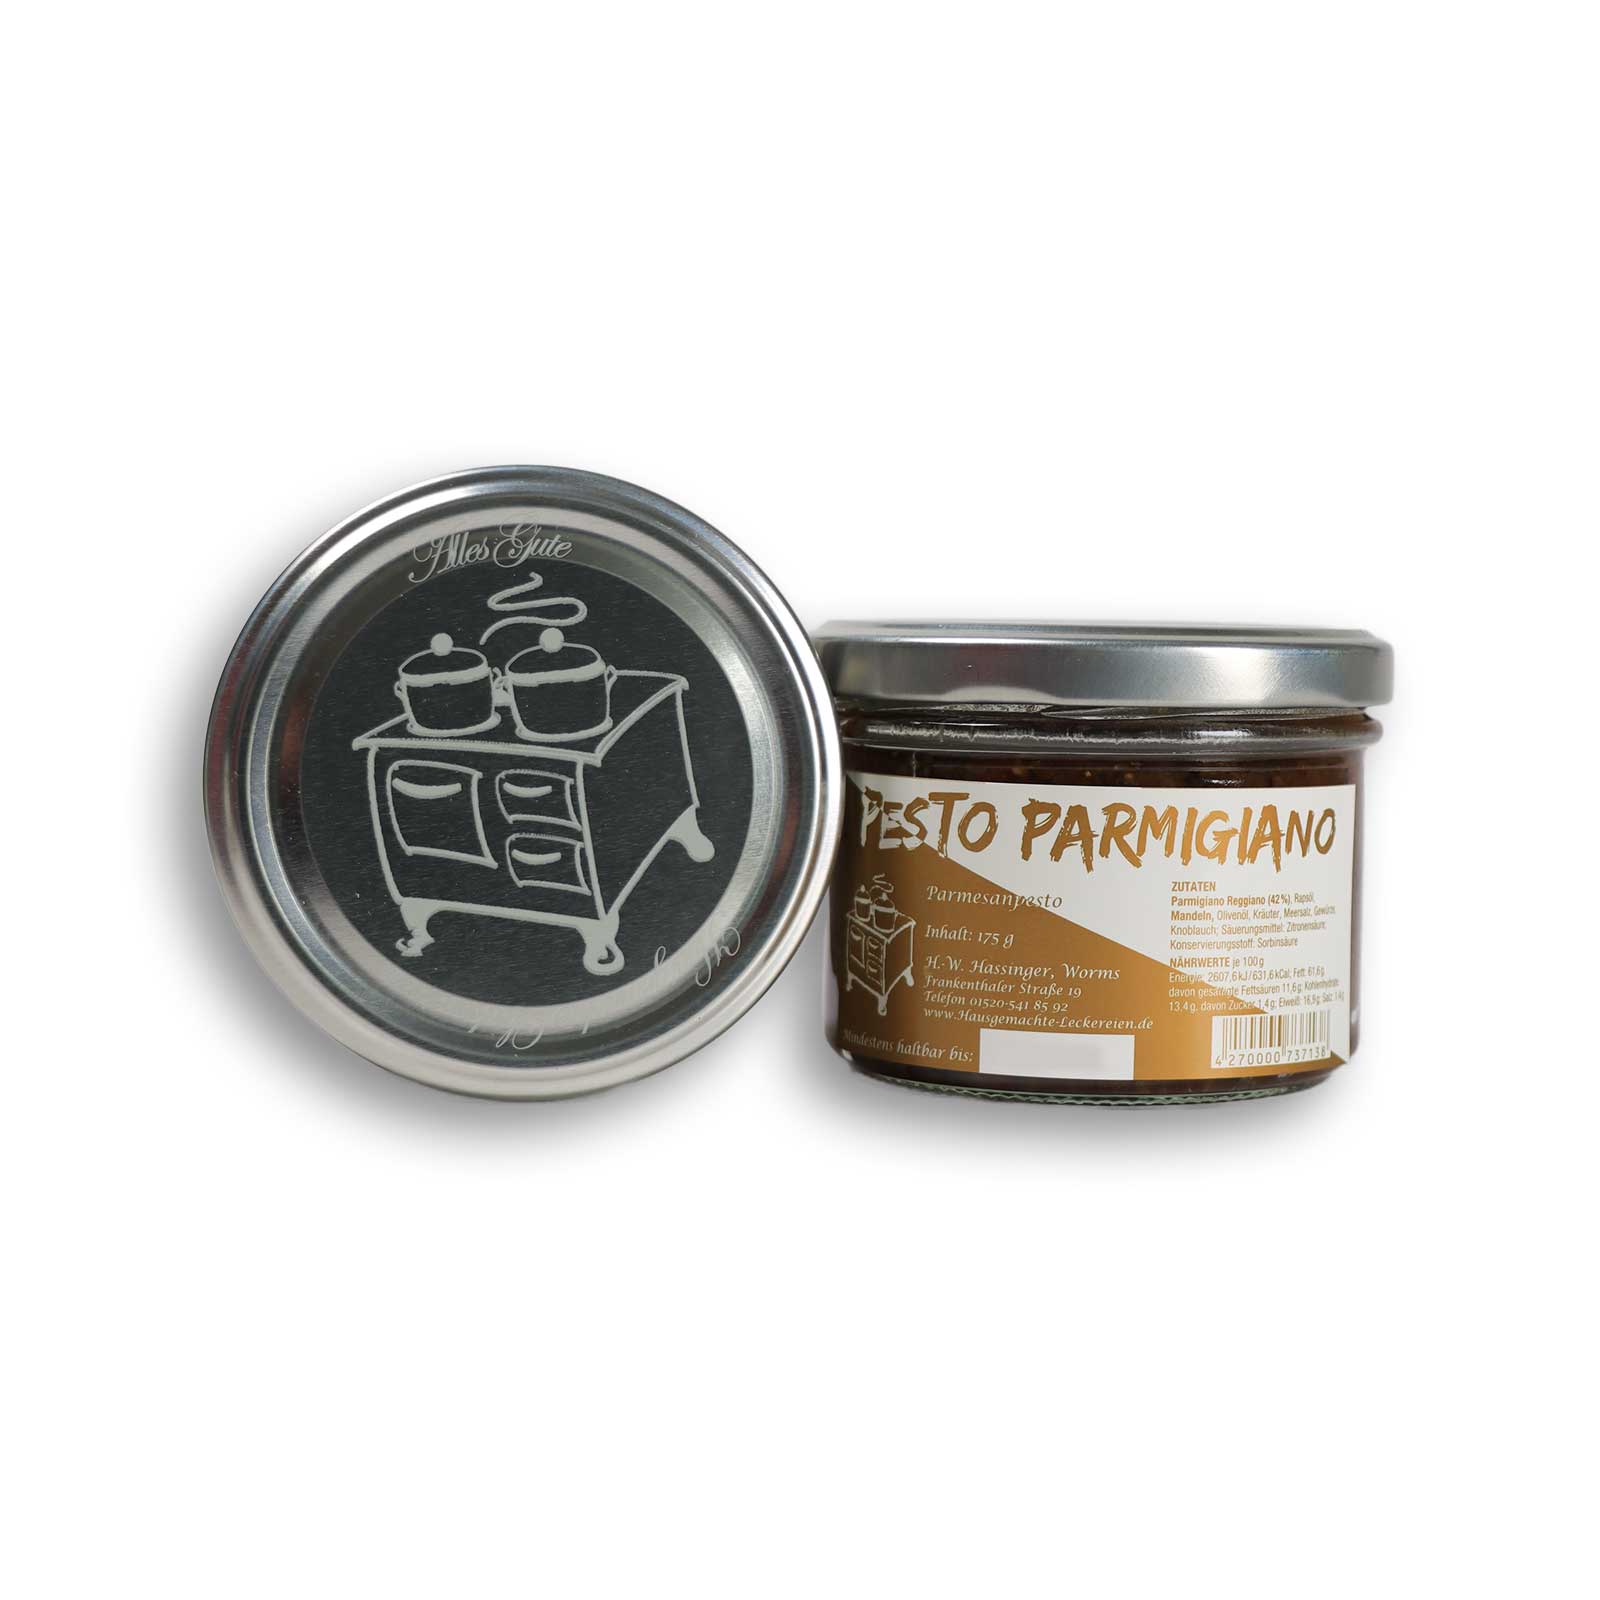 Pesto Parmigiano mit dem Deckel abgebildet